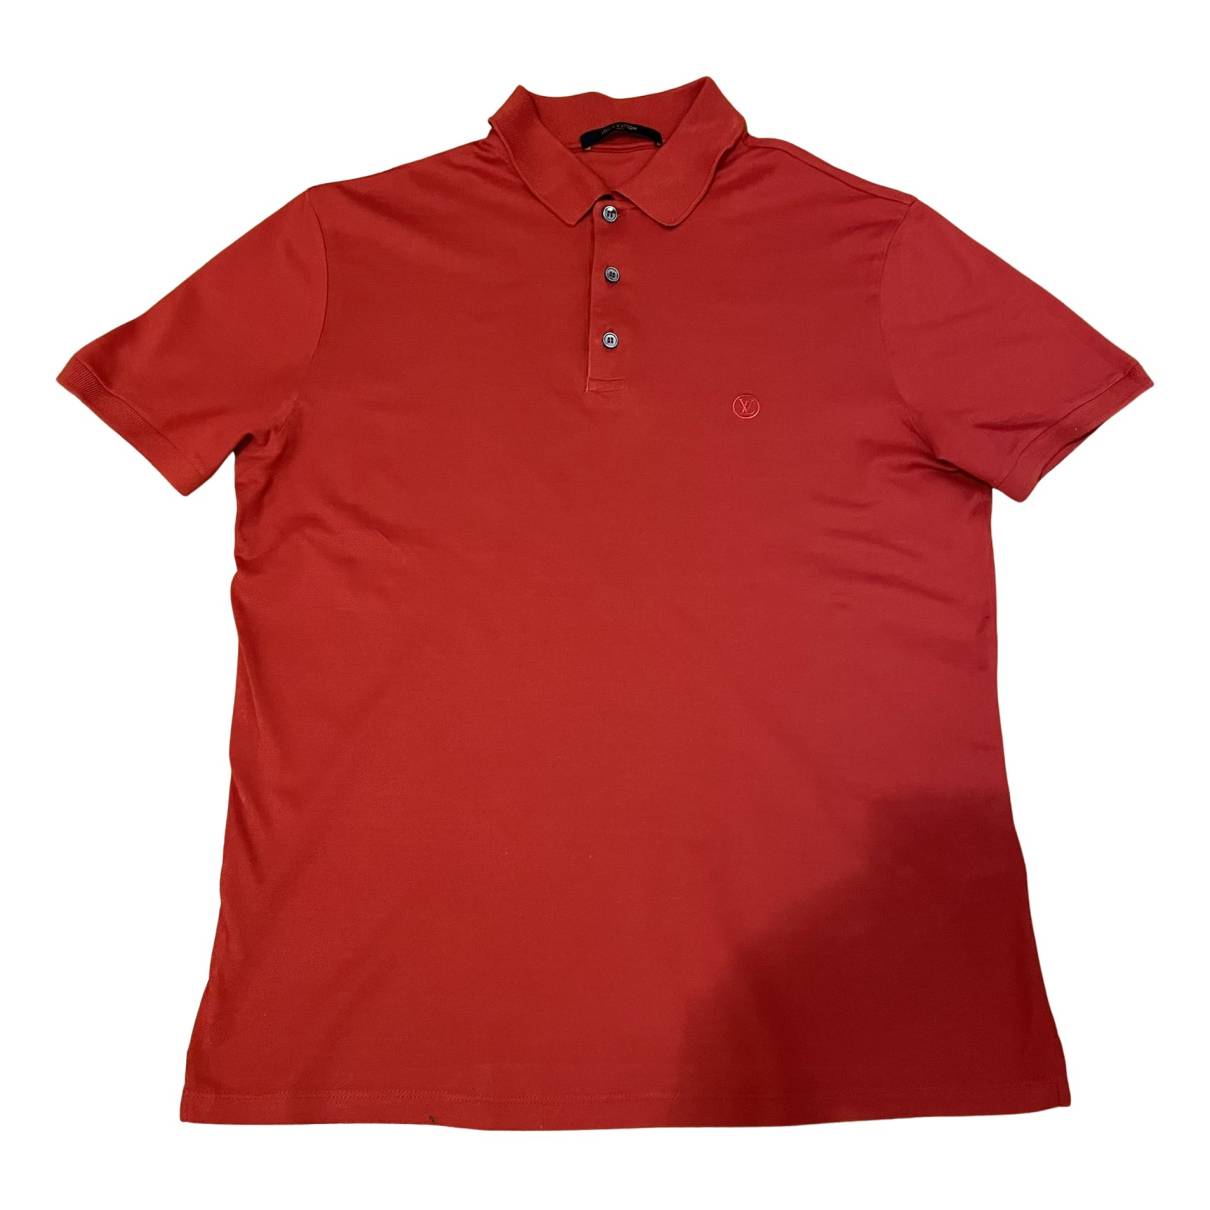 Louis Vuitton Classic Red Polo Shirt Men Size Medium Authentic